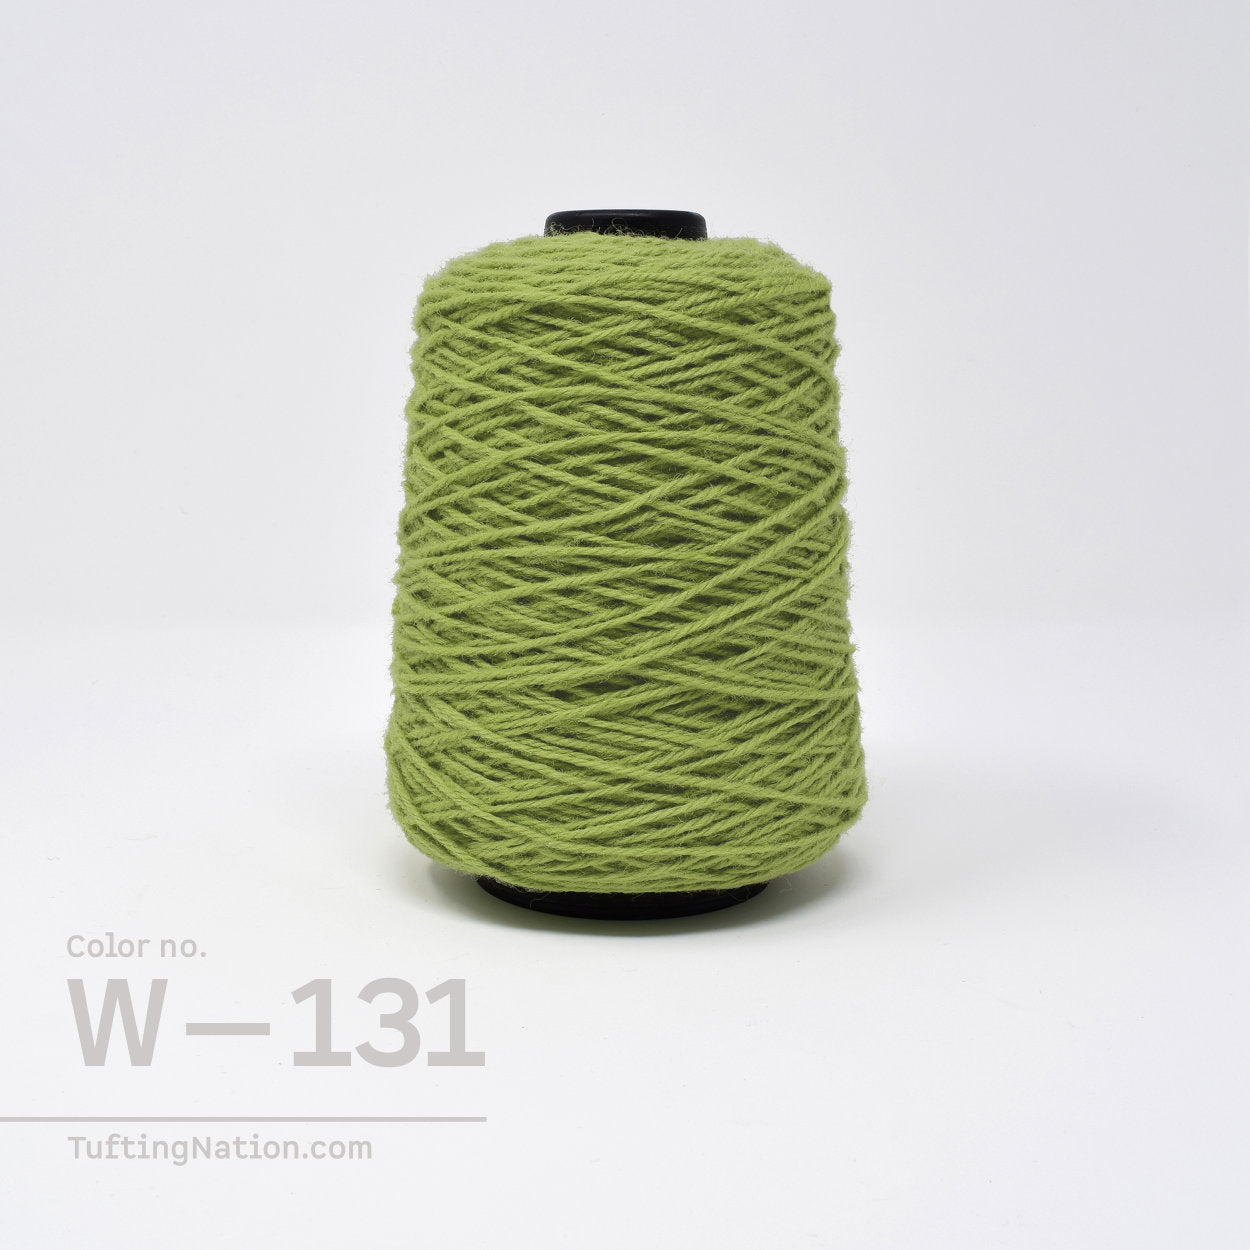 Green Wool Yarn on 0.5 pounds for Rug Tufting Gun | TuftingNation